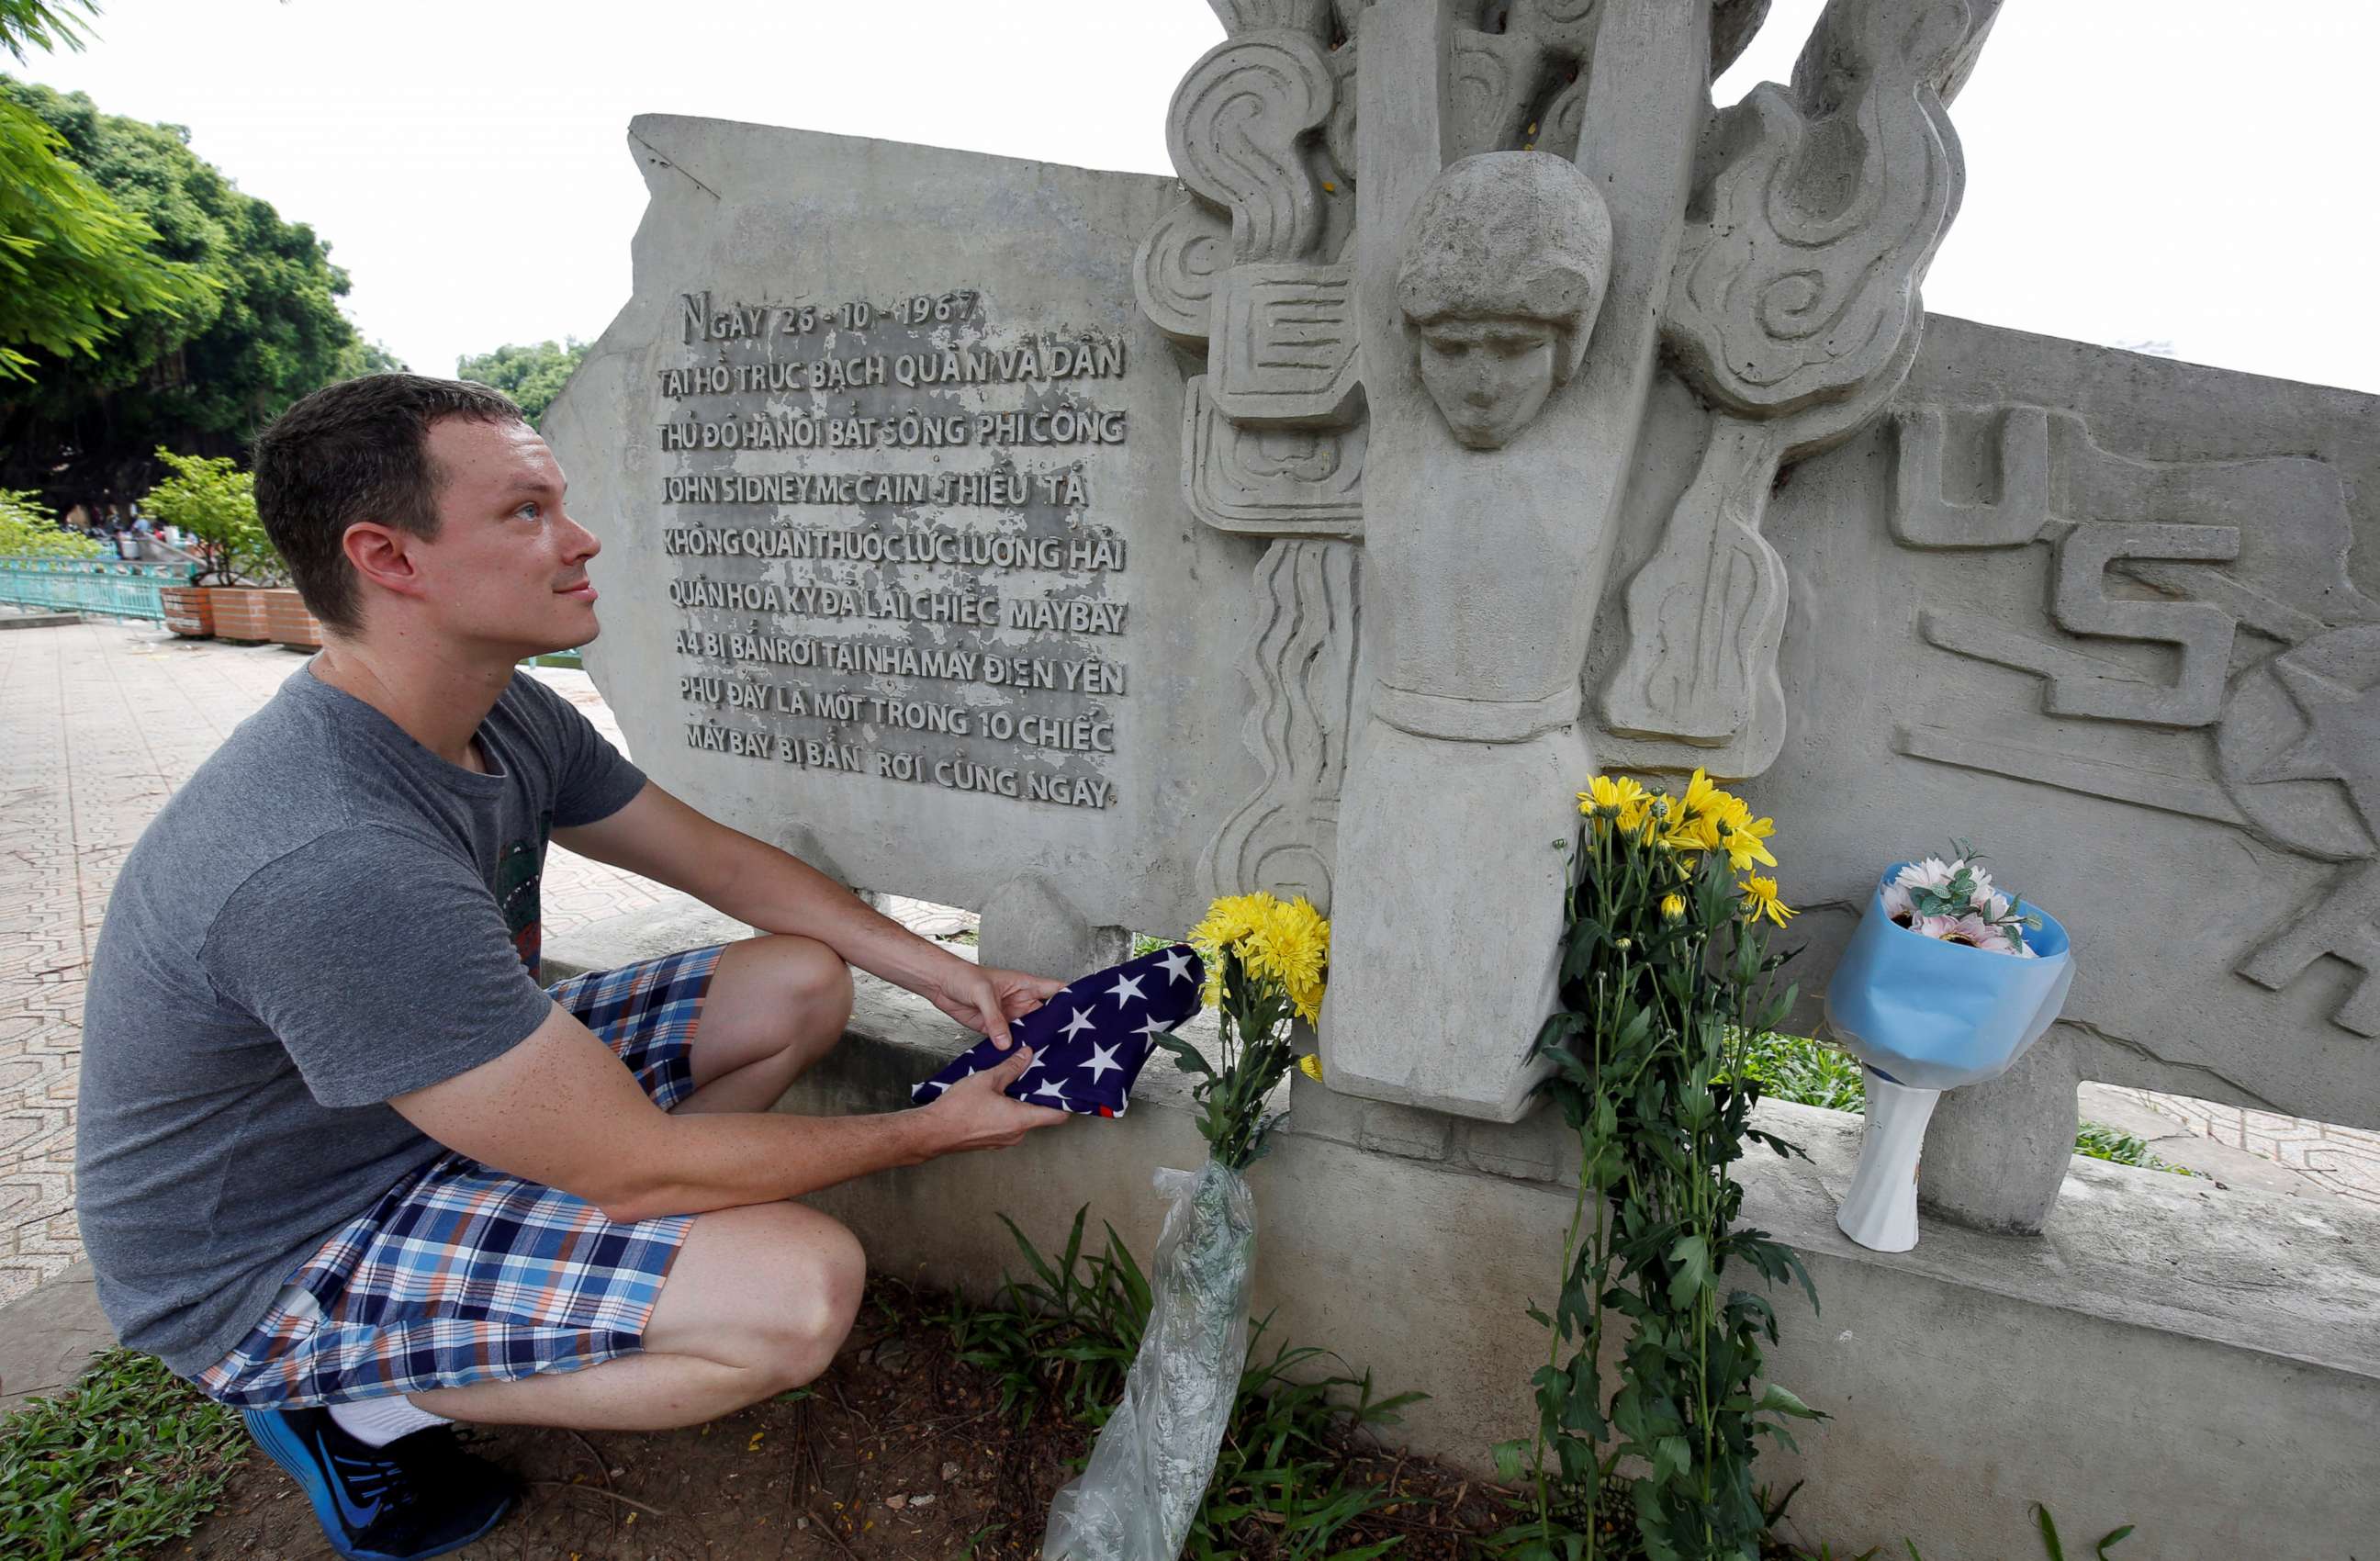 PHOTO: English teacher Derek Davis from the U.S. places an American flag and flowers in memory of the late Senator John McCain at the McCain Memorial in Hanoi, Vietnam, Aug. 26, 2018.